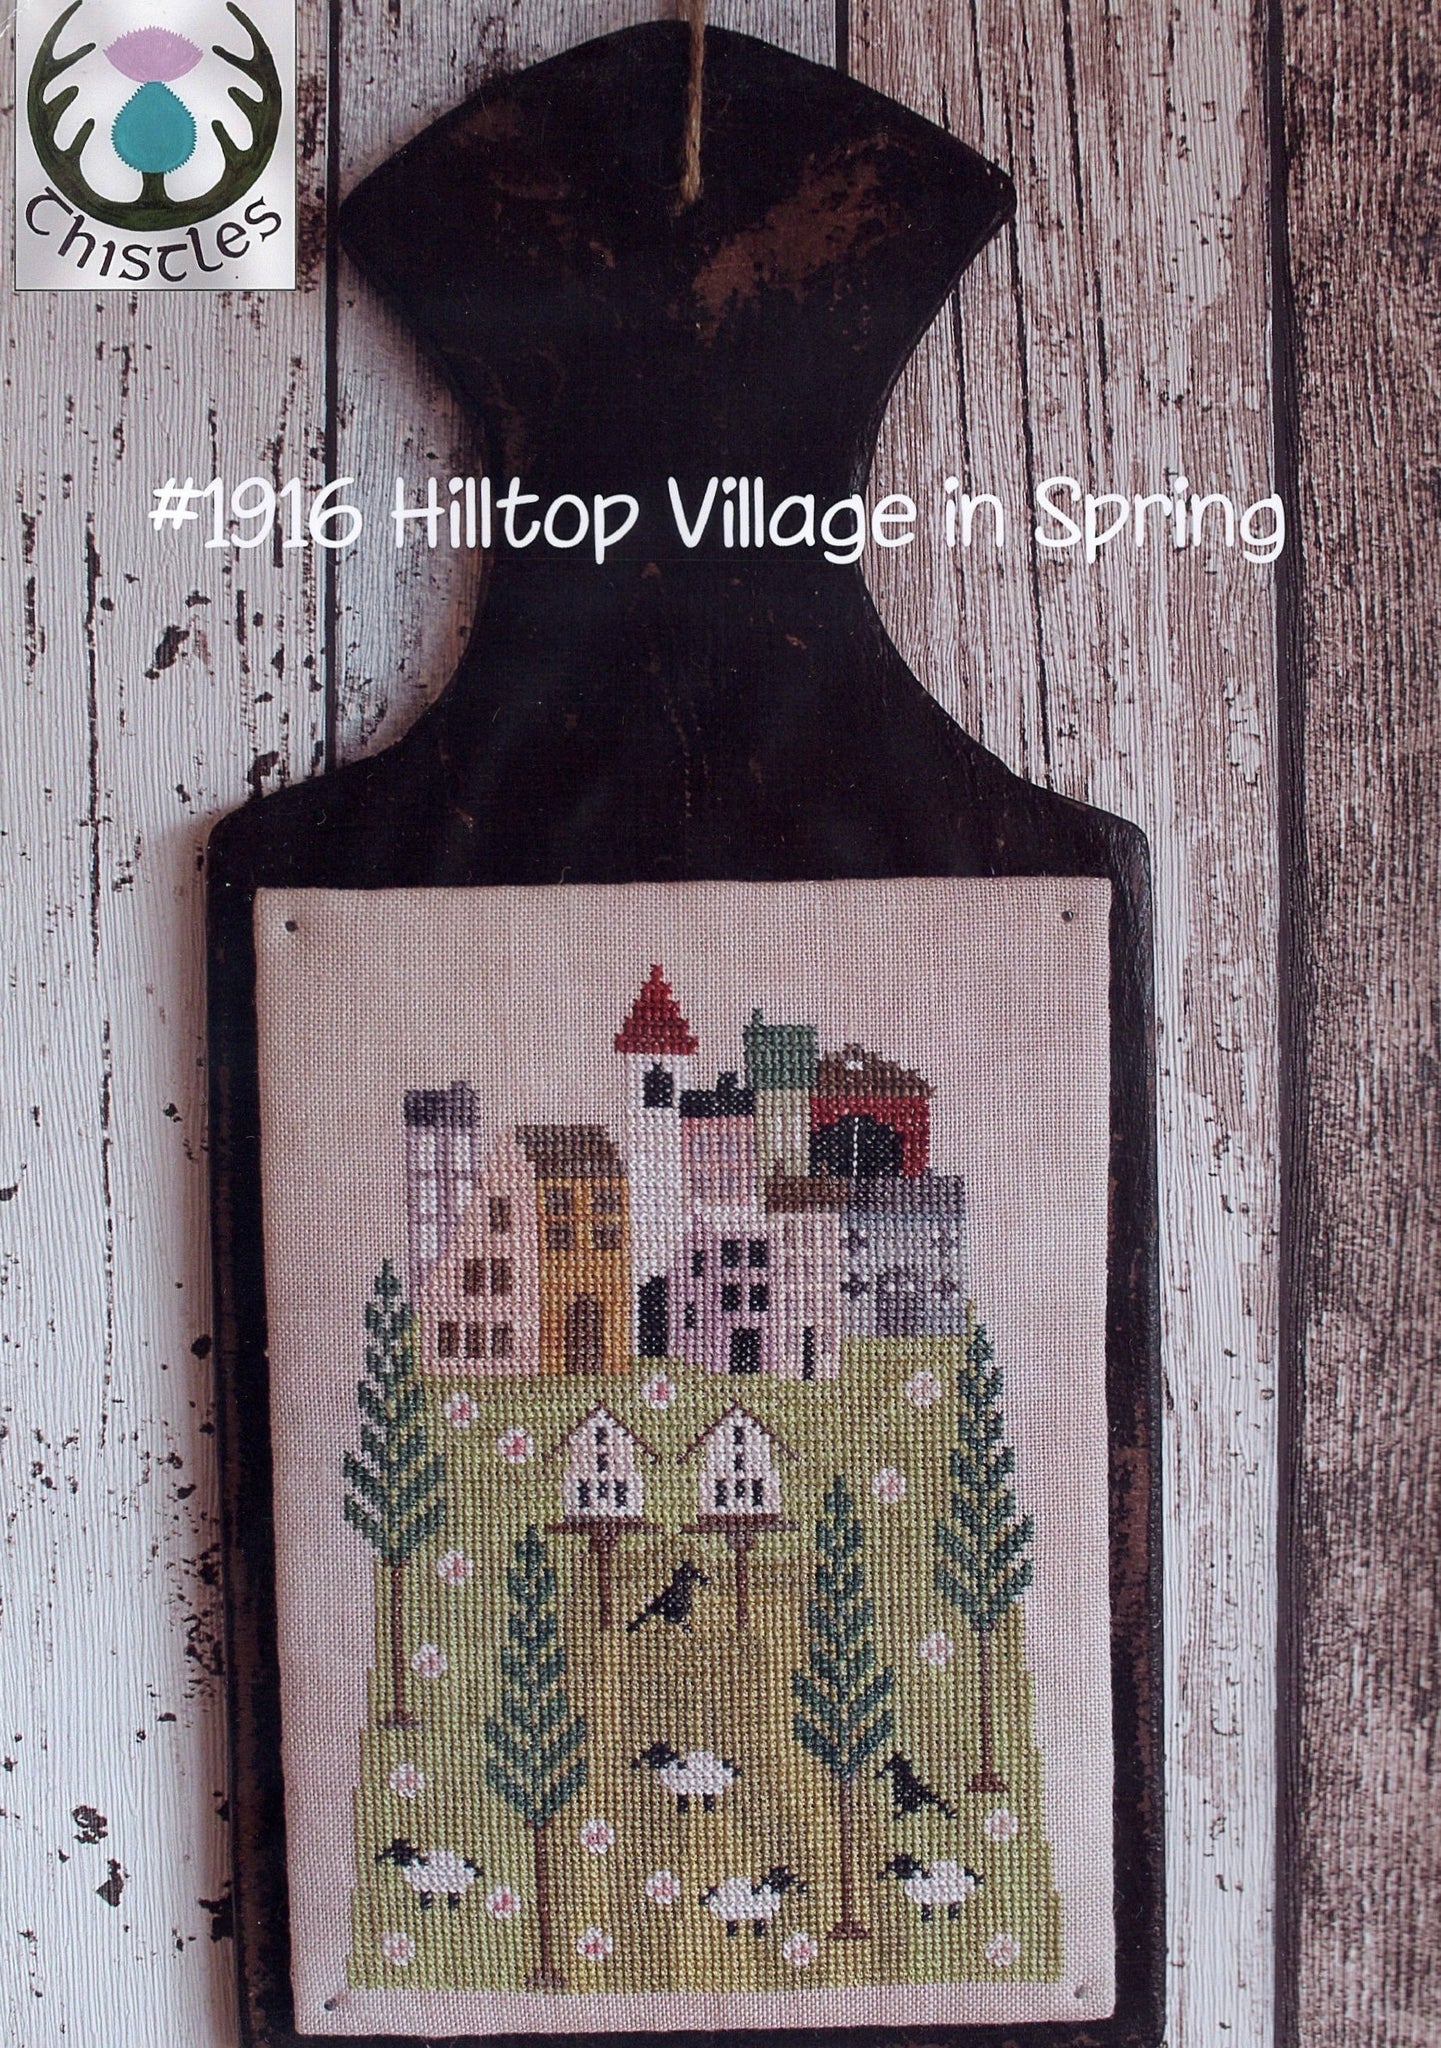 Hilltop Village in Spring - Thistles - Cross Stitch Pattern